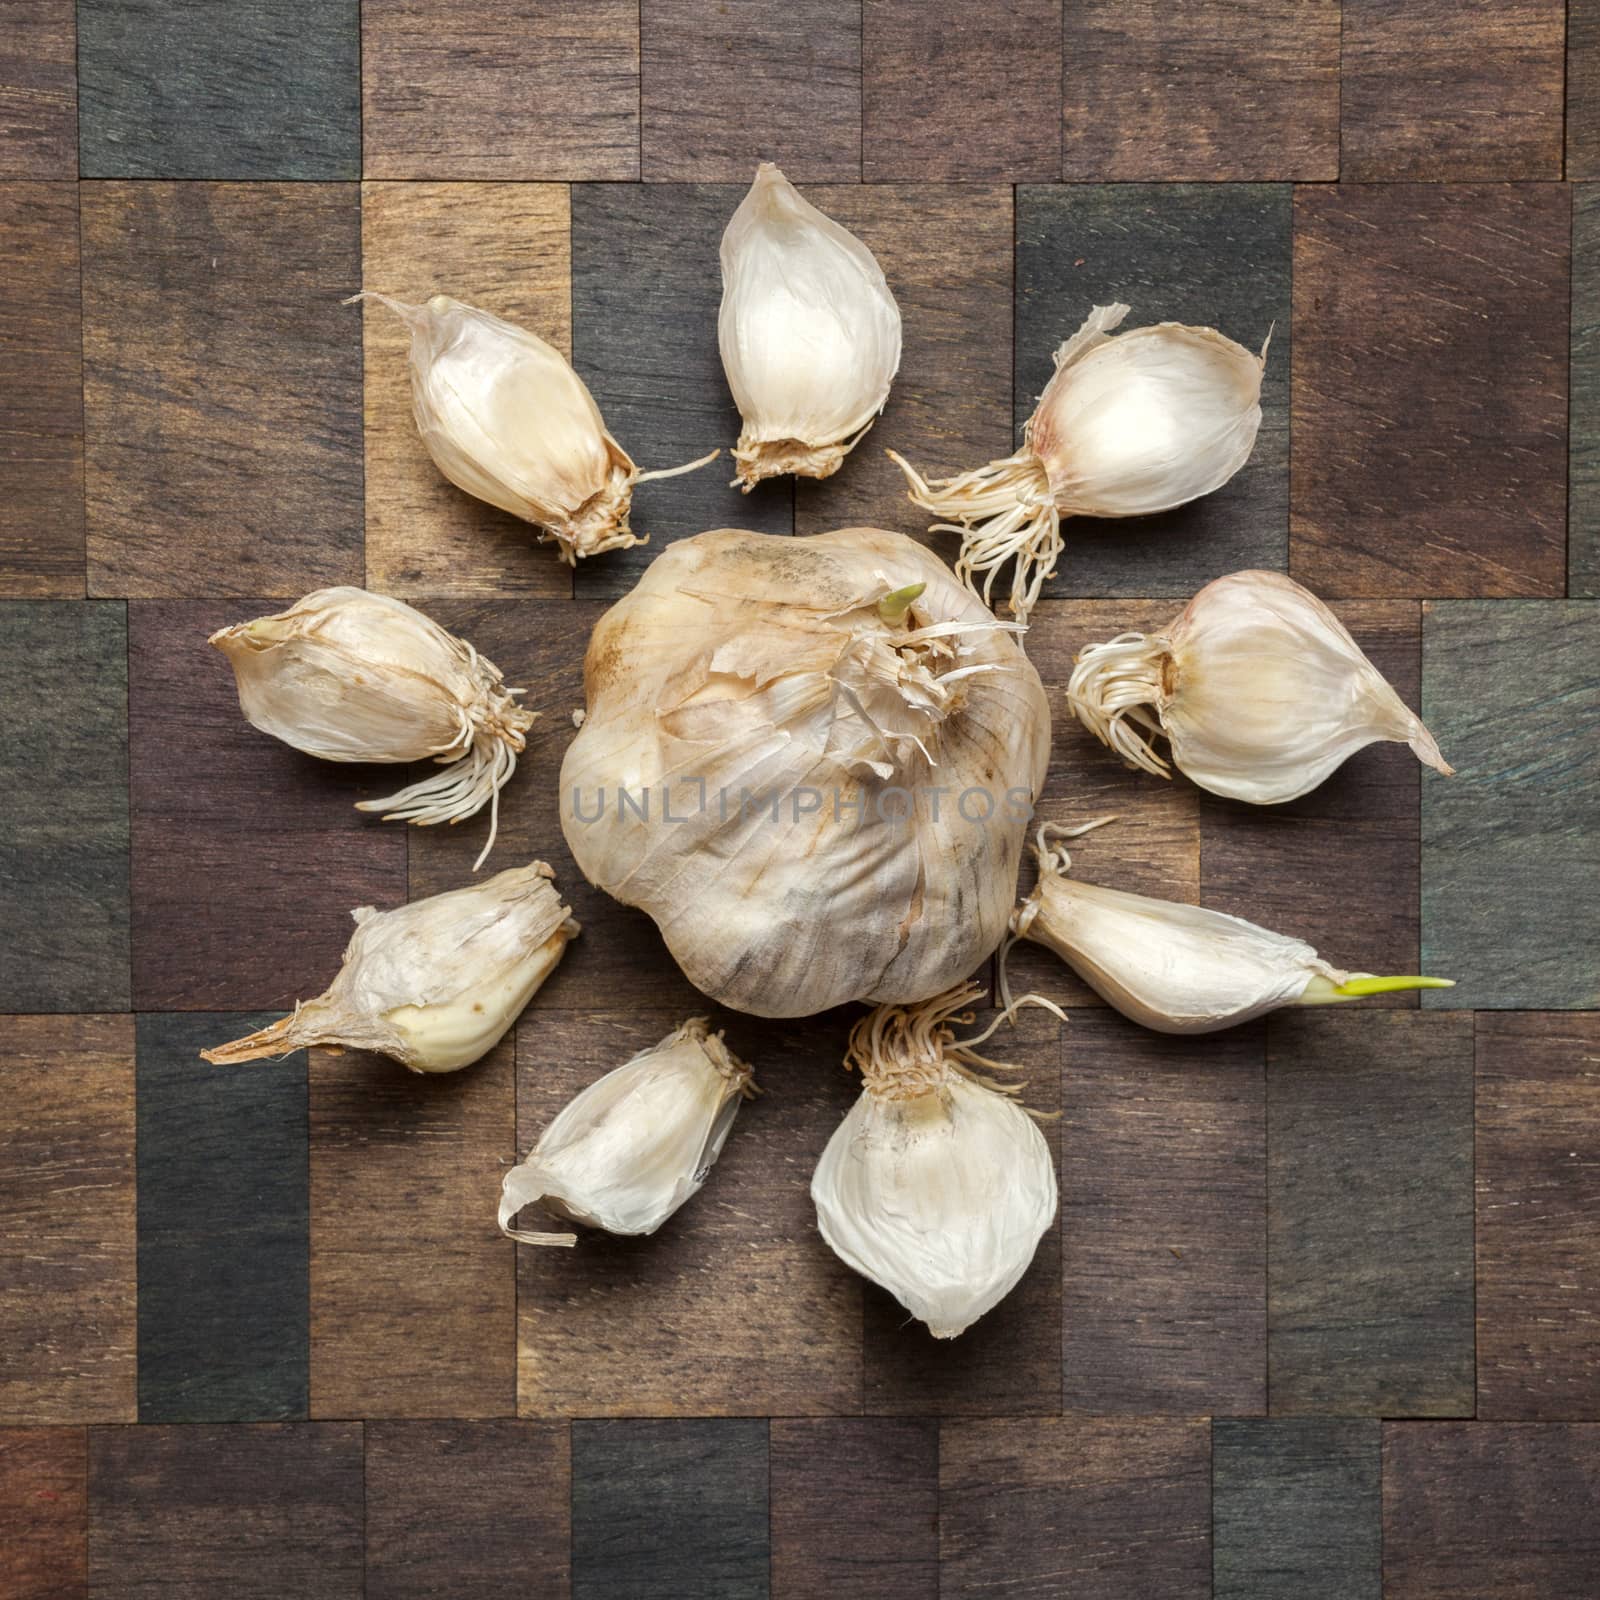 Garlic by Portokalis